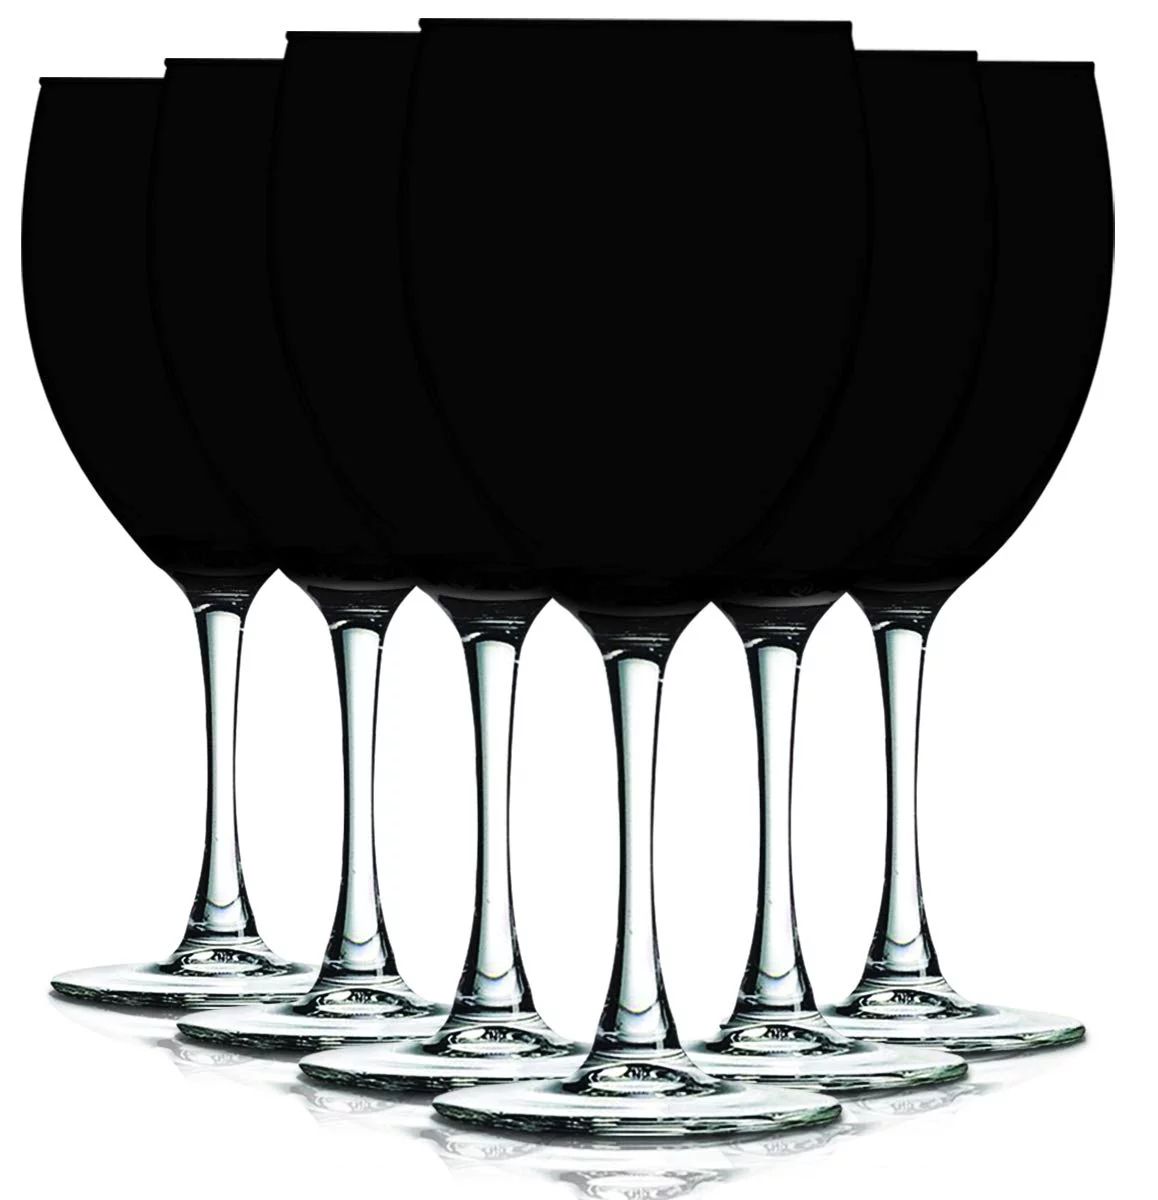 TableTop King 10 oz Wine Glasses, Stemmed Style, Nuance Top Accent, Black, Set of 6 | Walmart (US)